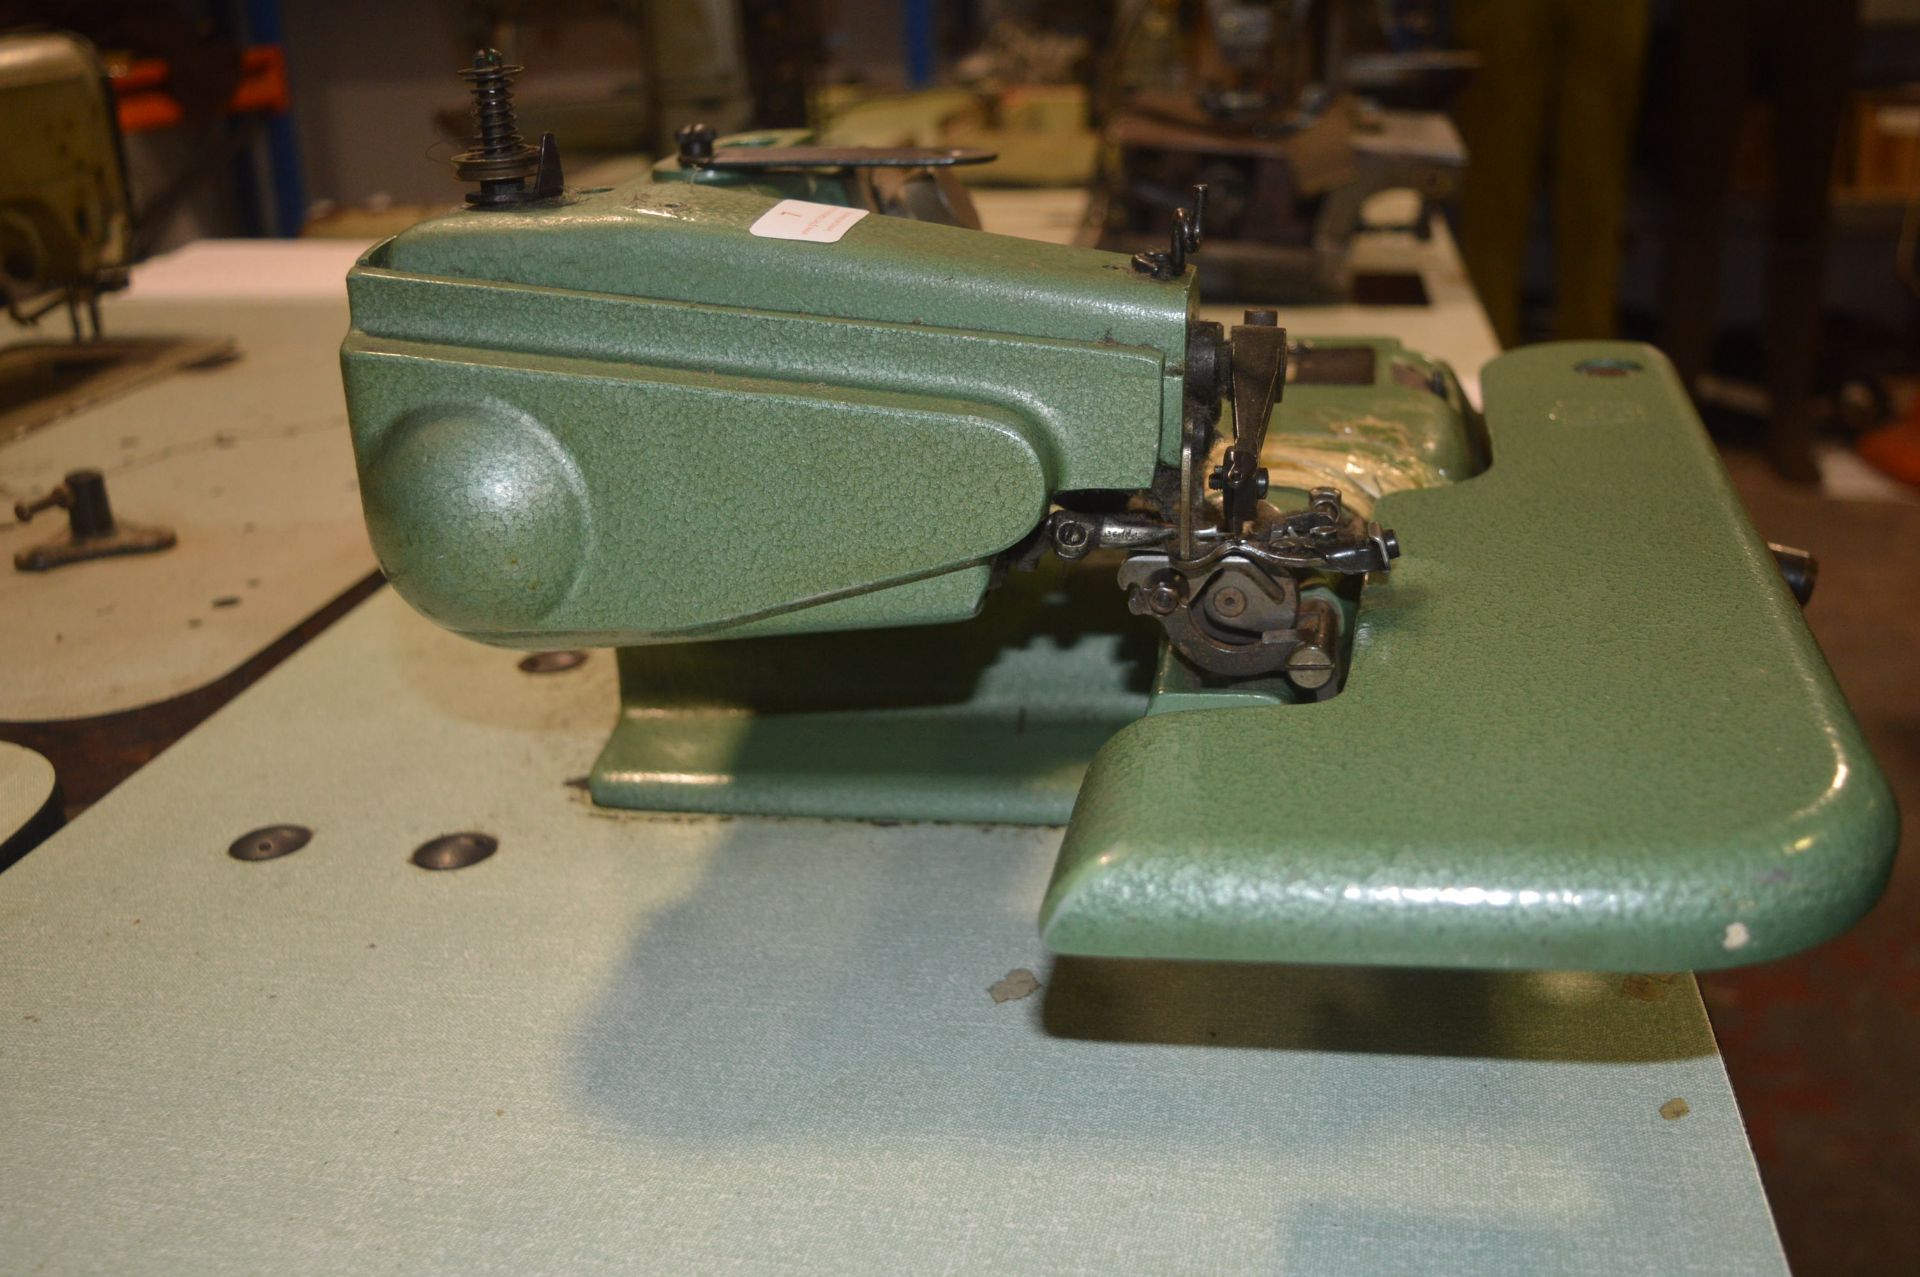 Bottom Fella Bind Hem Stich Machine Co. Sewing Machine on Table - Image 2 of 3